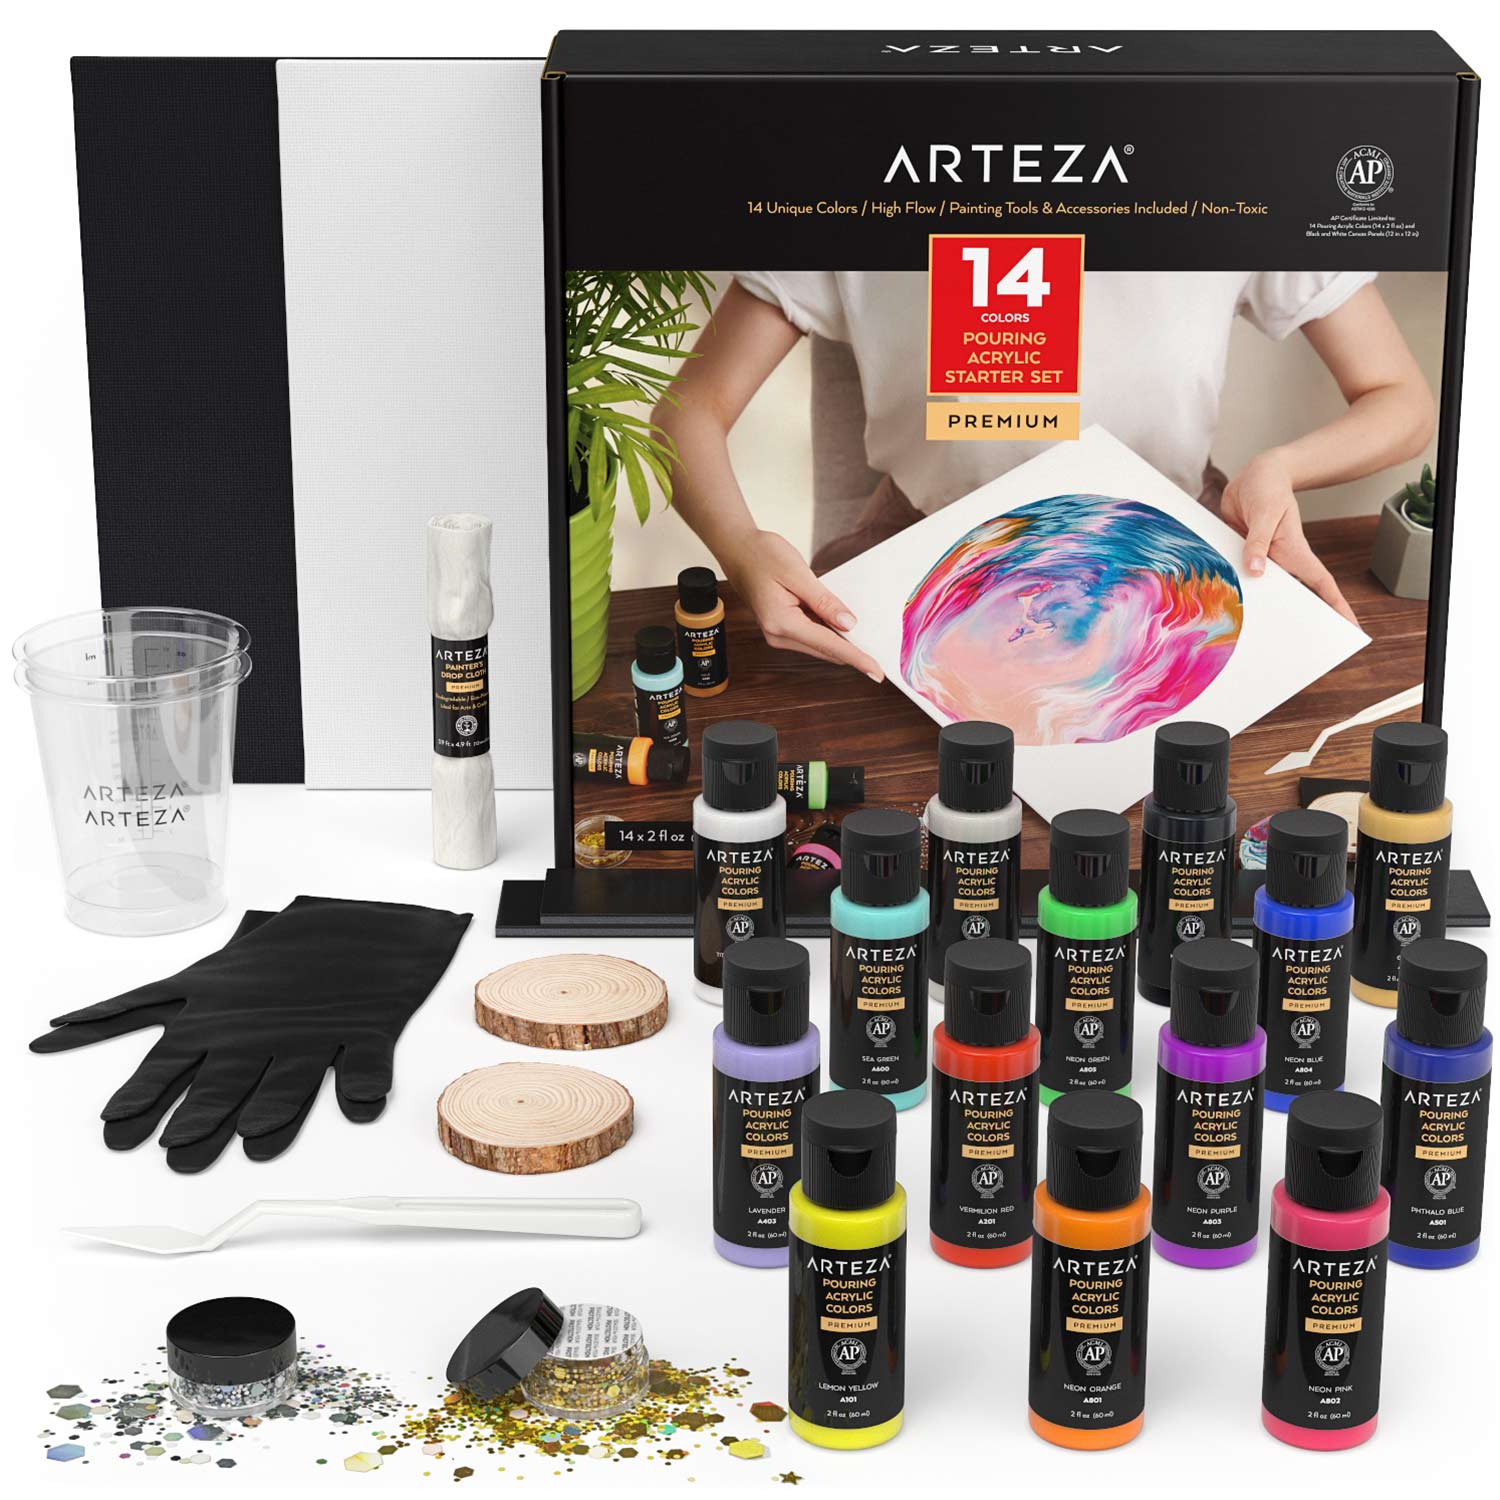 Arteza Acrylic Pouring Paint Art Supply Kit, 2 Oz Bottles Set - 32 Pack :  Target